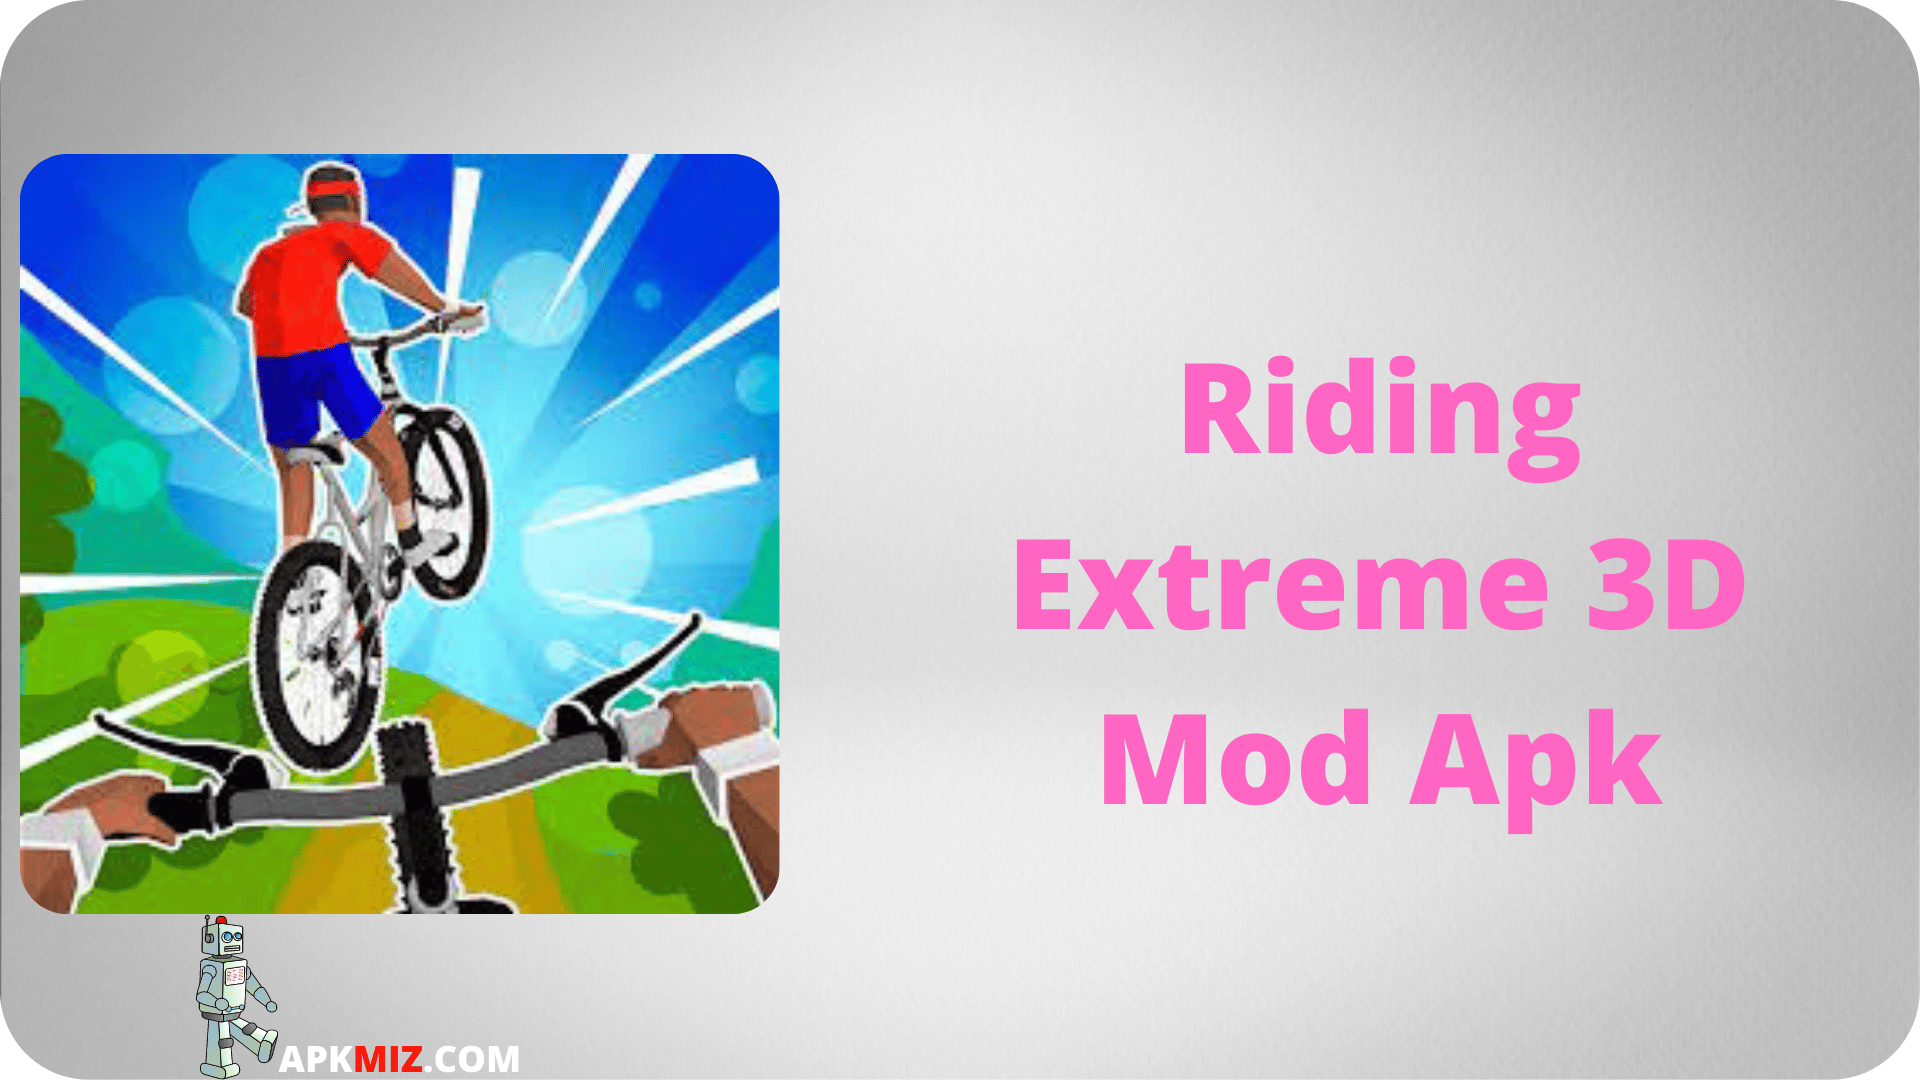 Riding Extreme 3D Mod Apk